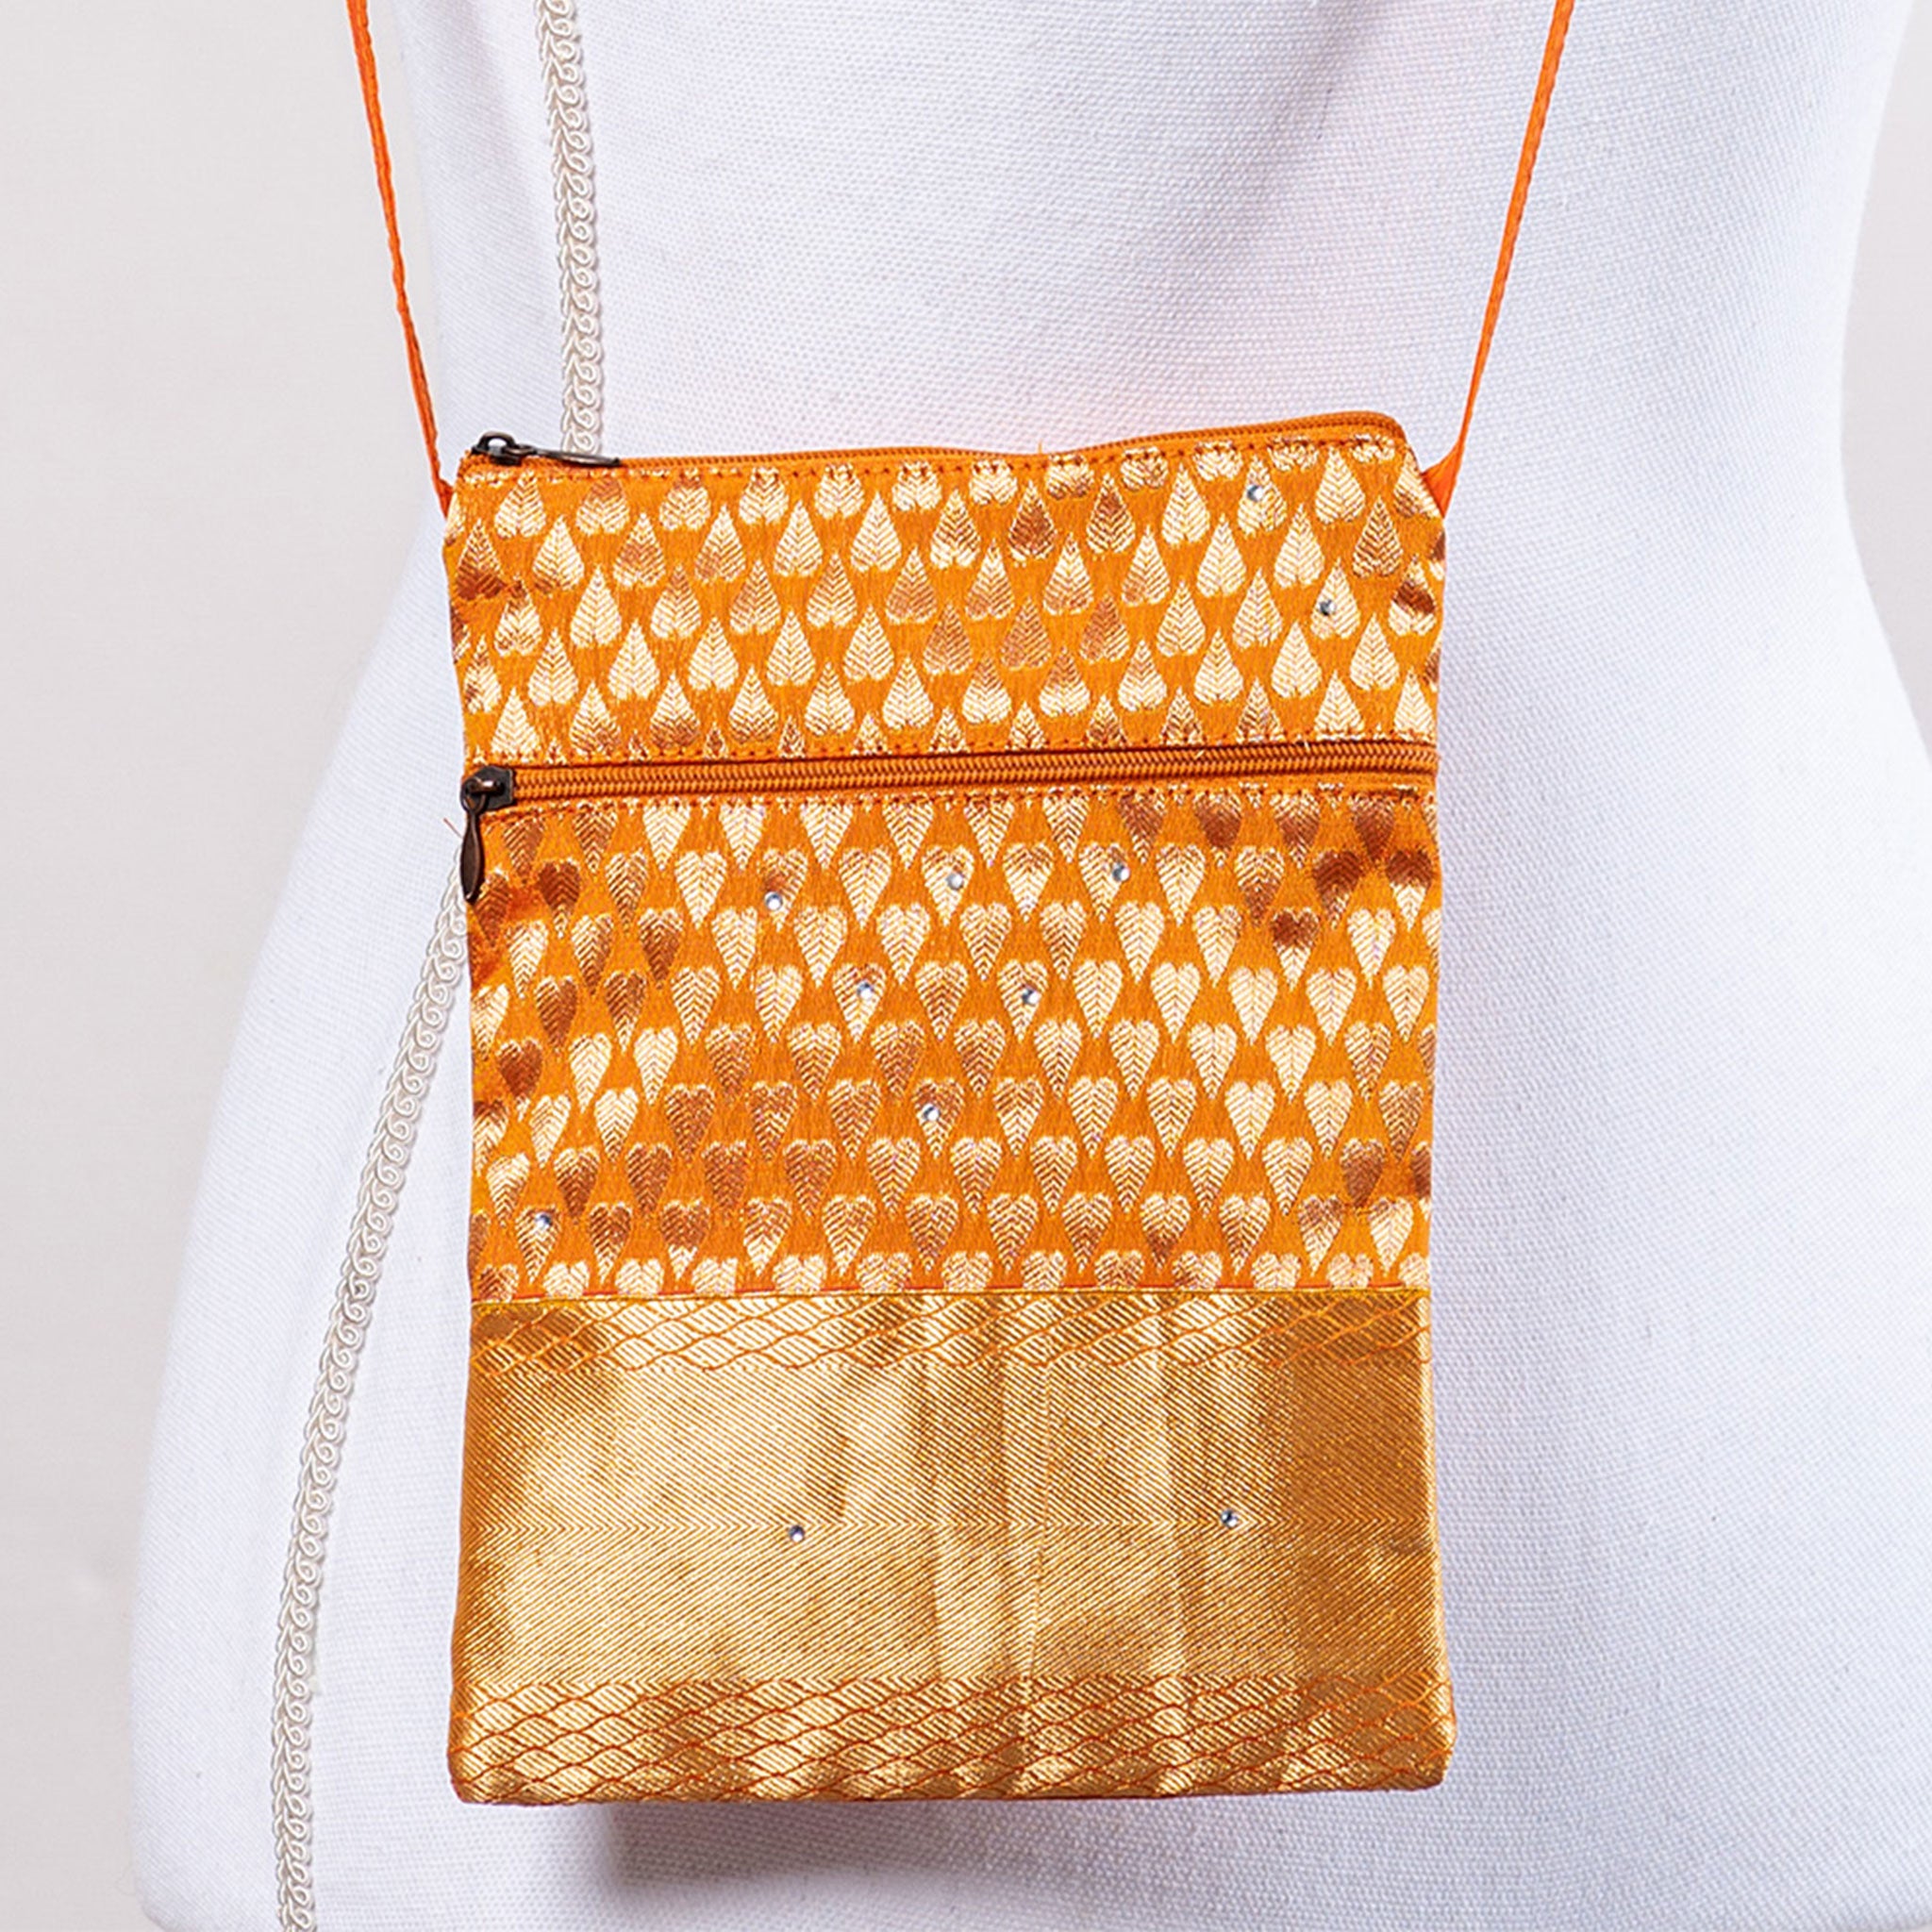 Louis Vuitton limited edition Sari Dress